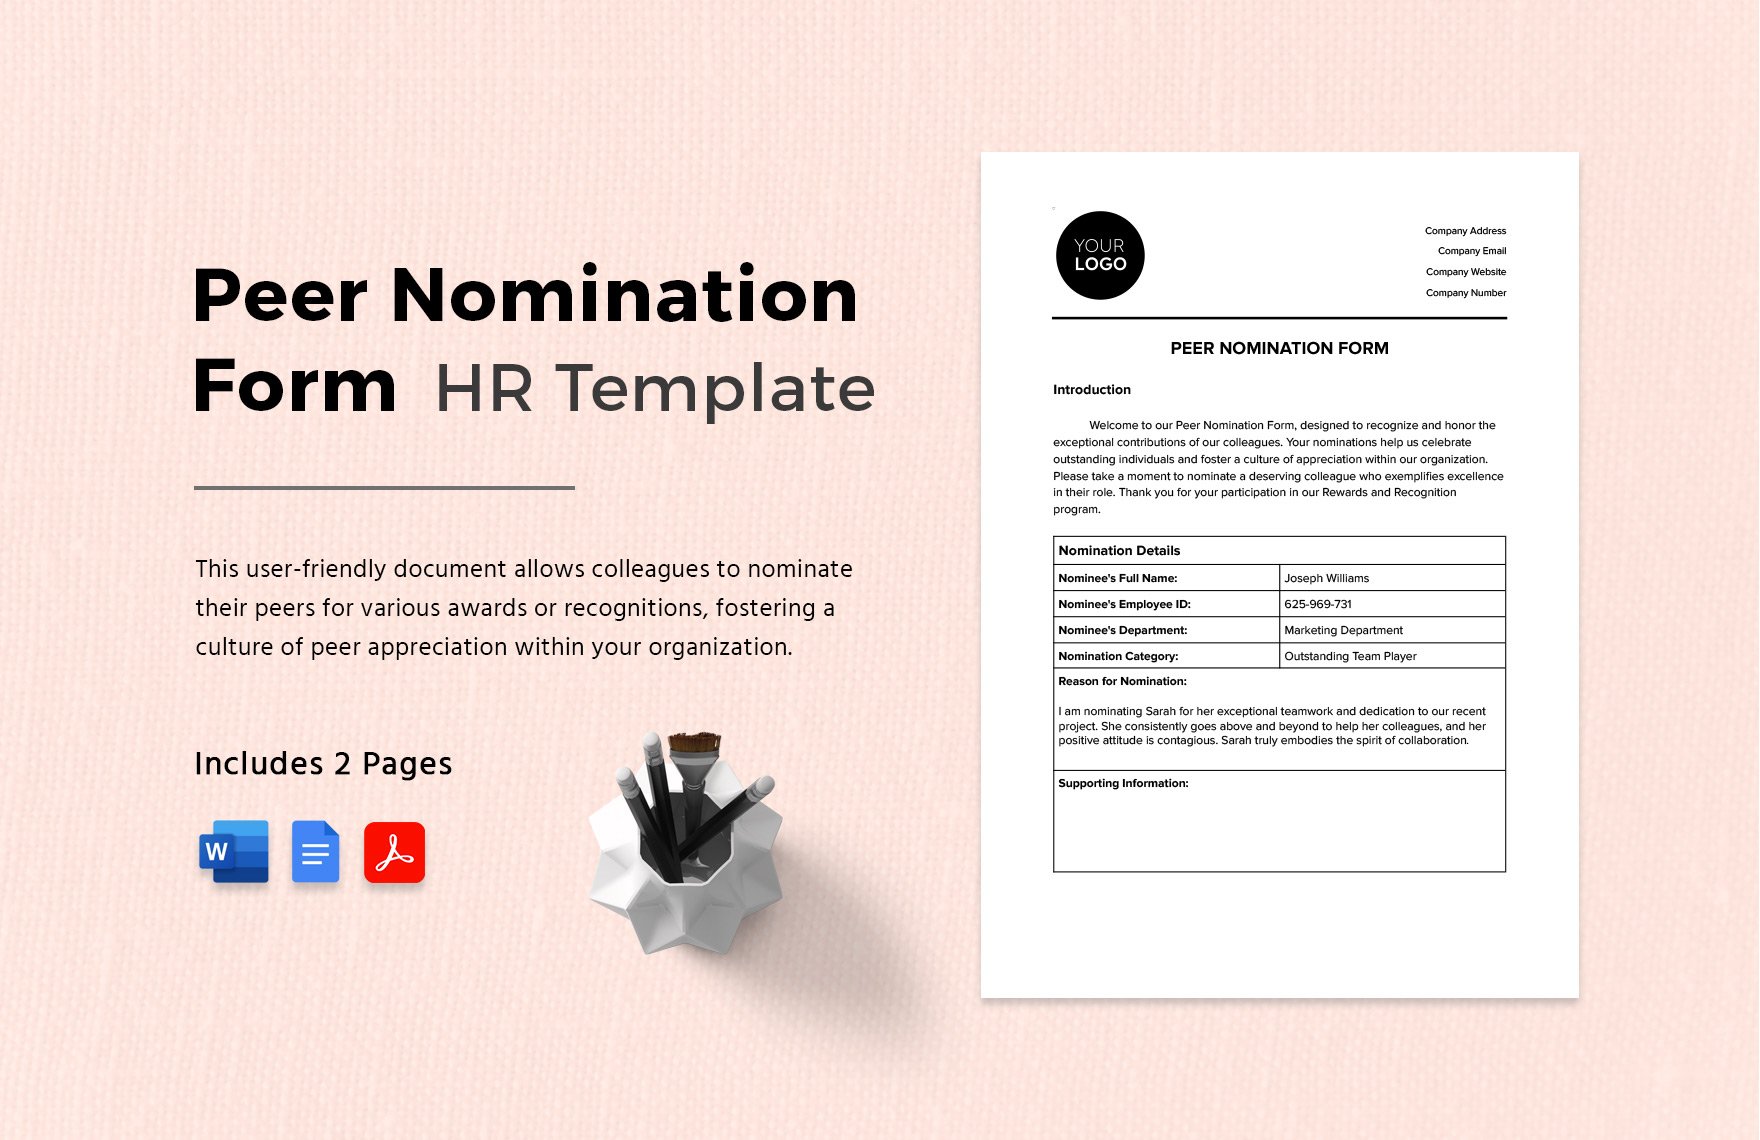 Peer Nomination Form HR Template